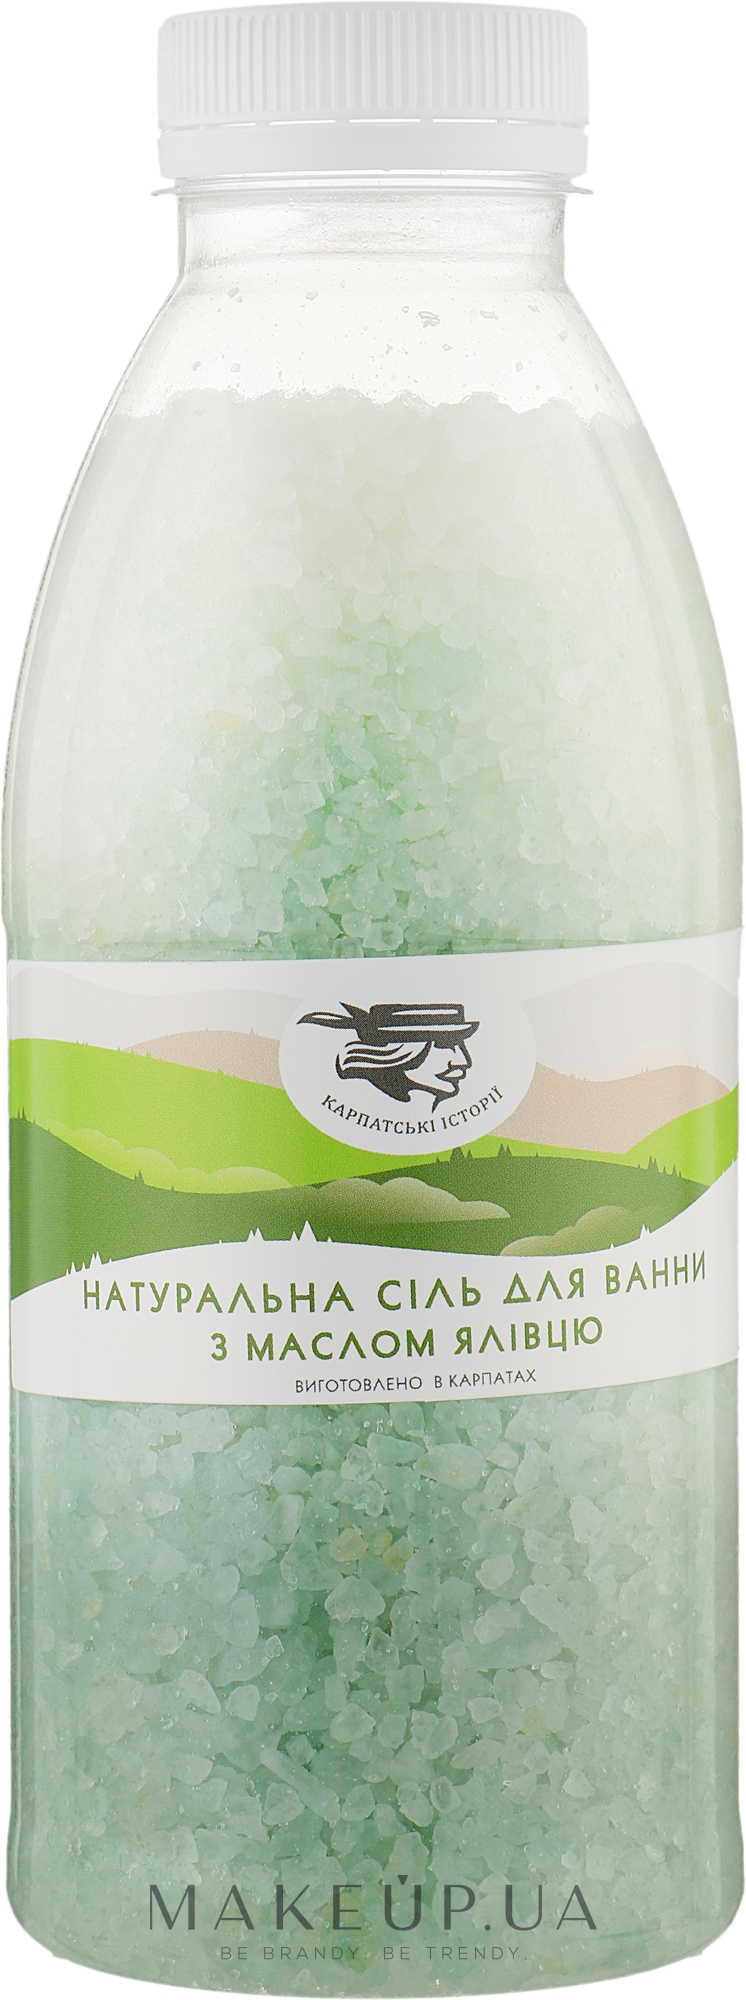 Натуральная соль для ванны с маслом можжевельника - Карпатські Істор — фото 600g